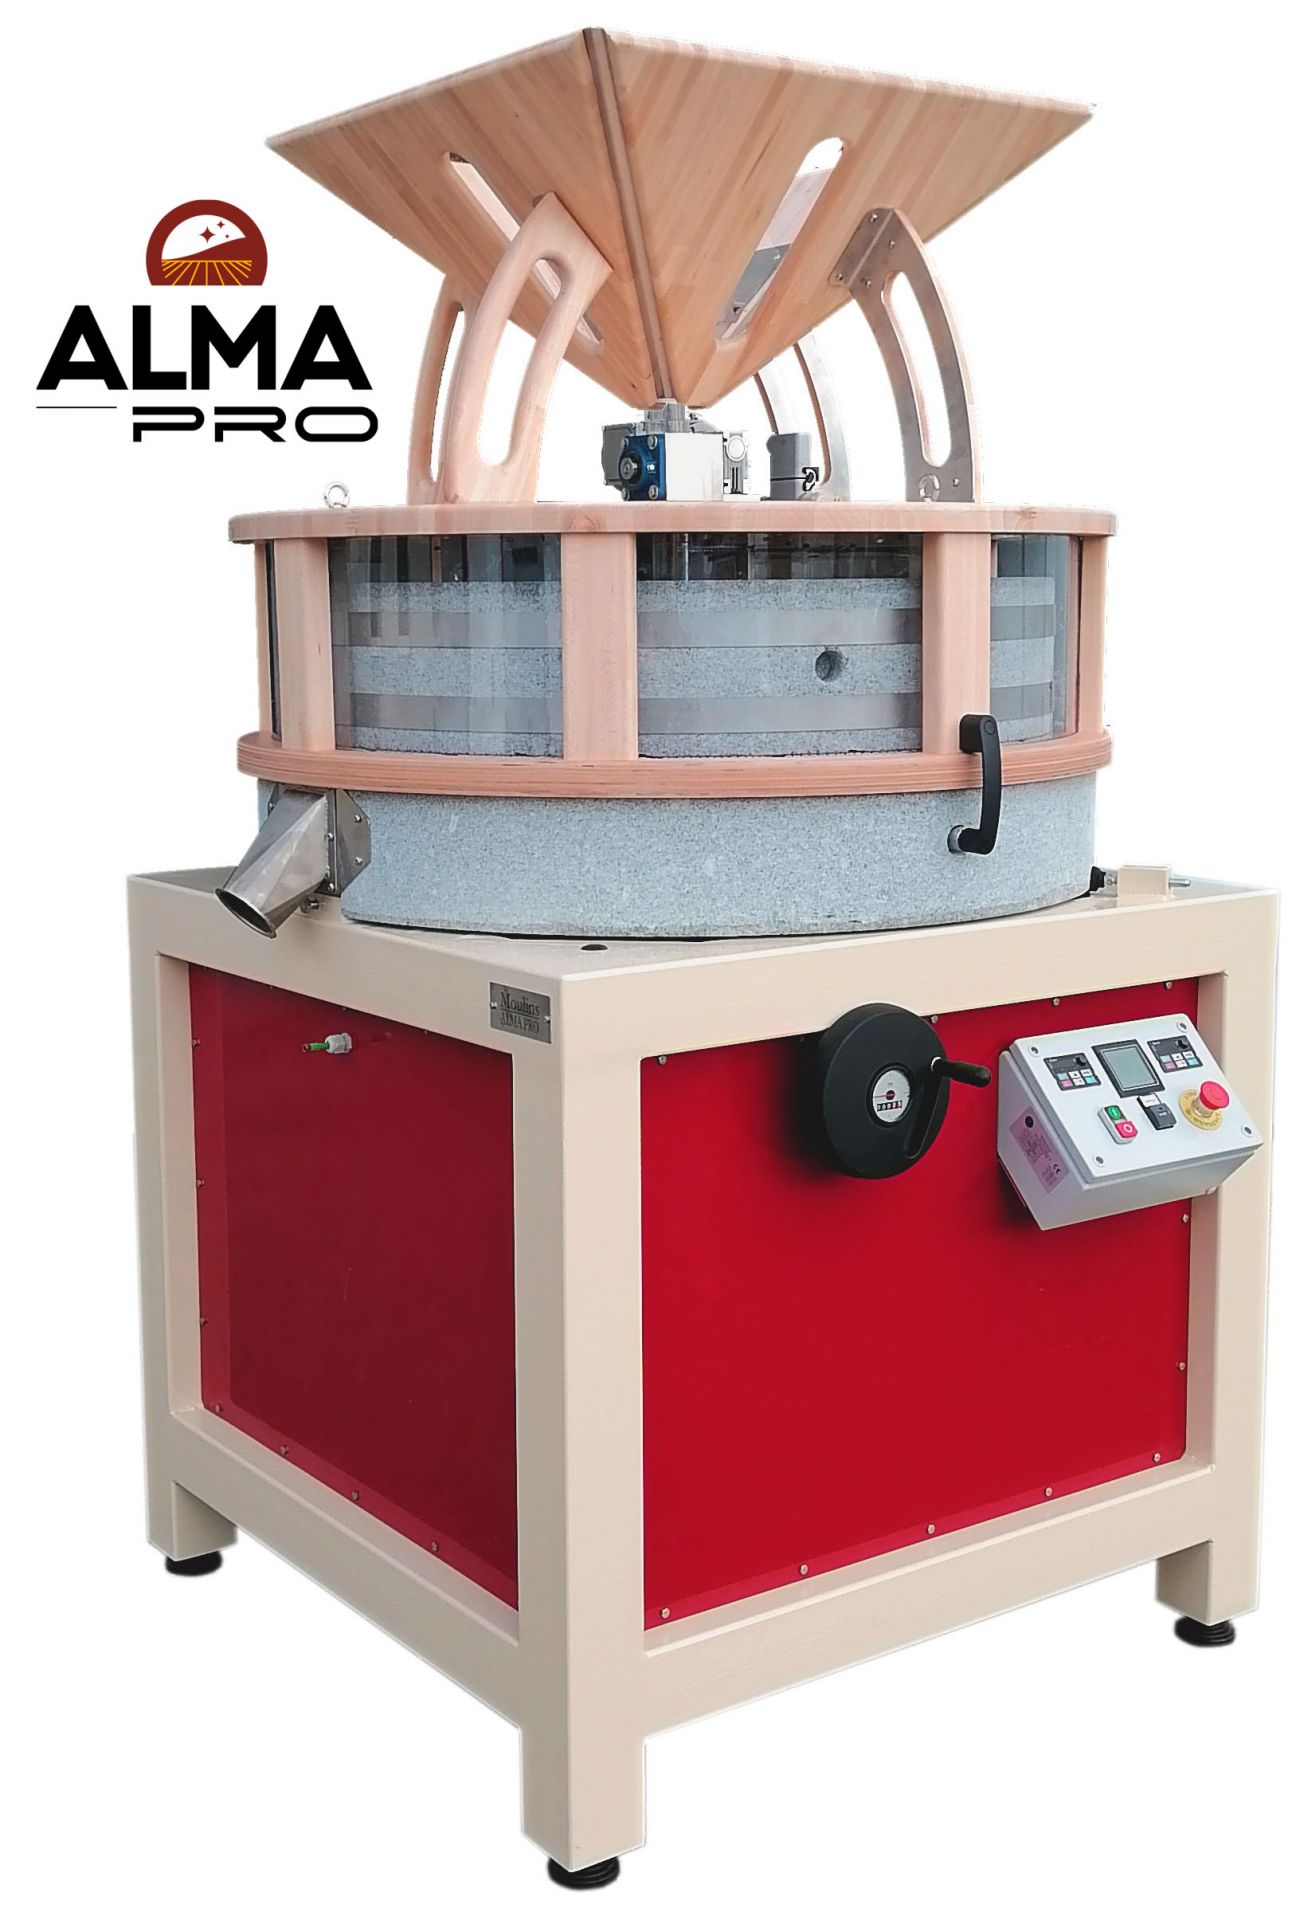 Moulin professionnel 100 kg/h, Alma Pro